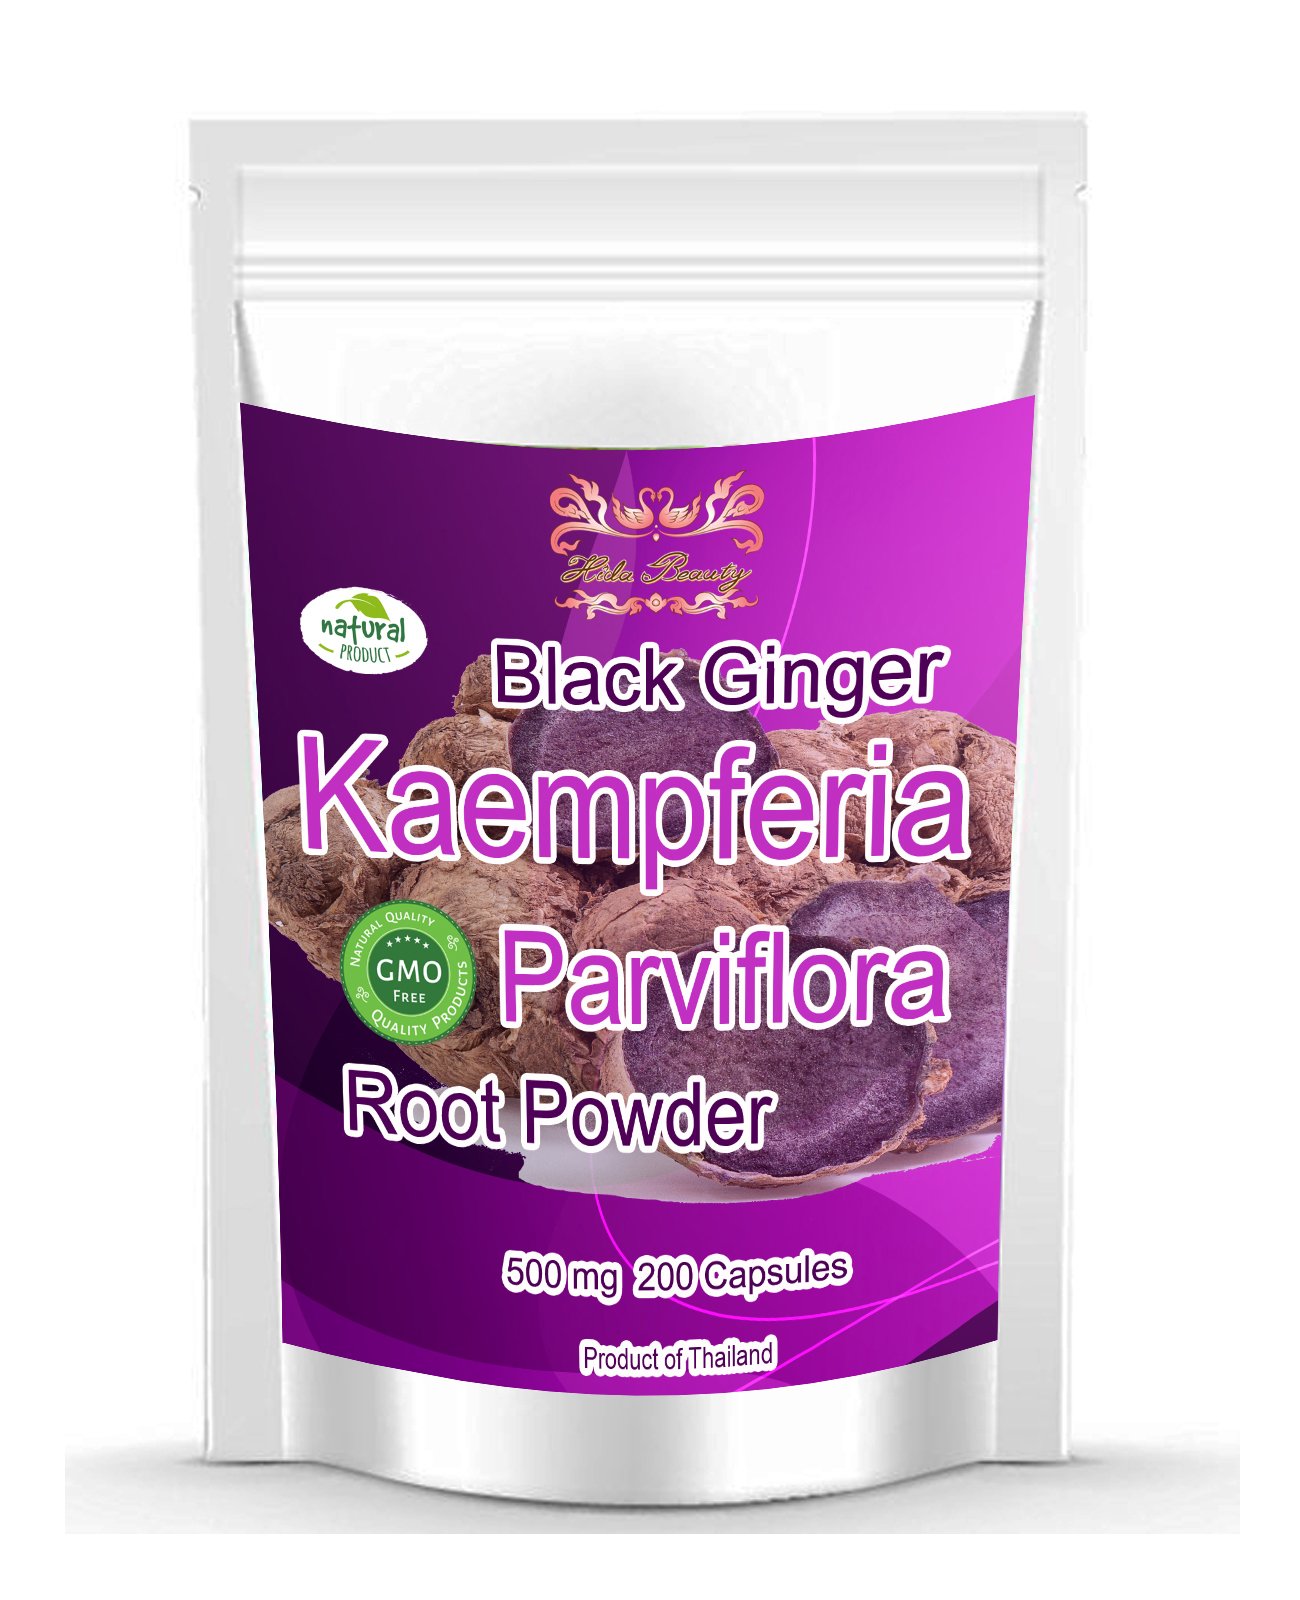 Kaempferria Parviflora Root Powder Capsules Black Ginger (200 Capsules)